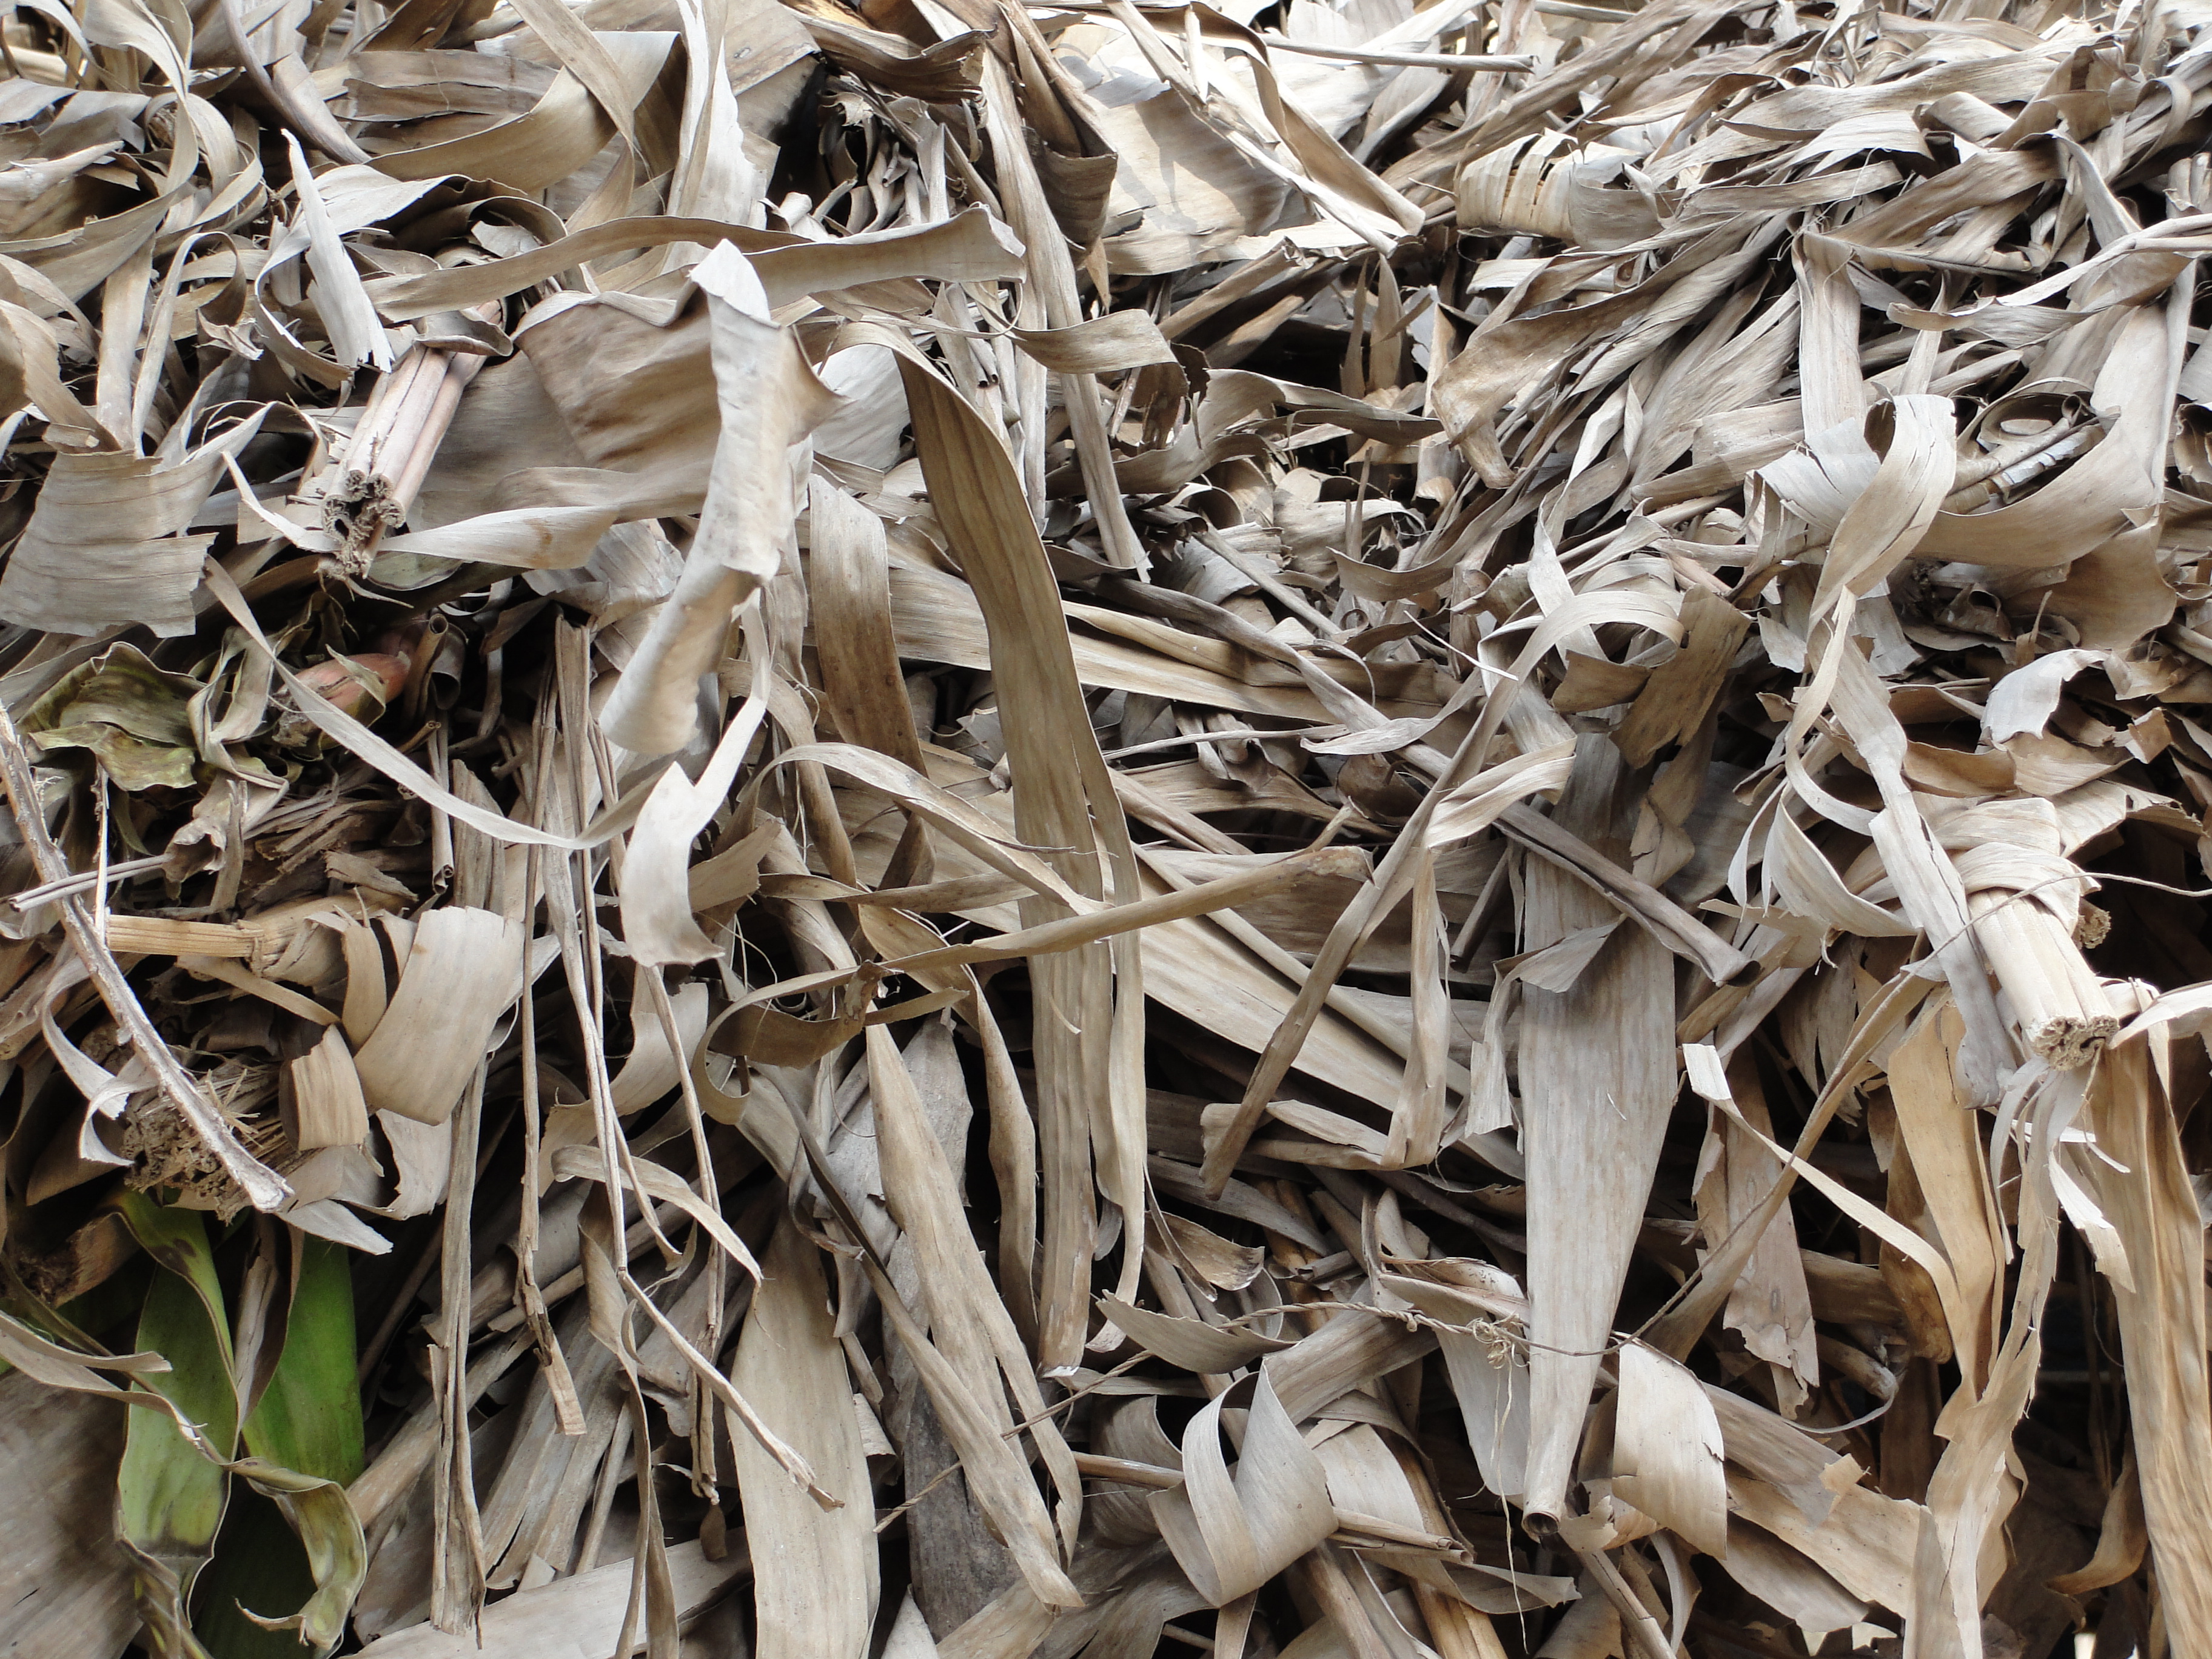 File:A dried leaves of banana.JPG - Wikimedia Commons